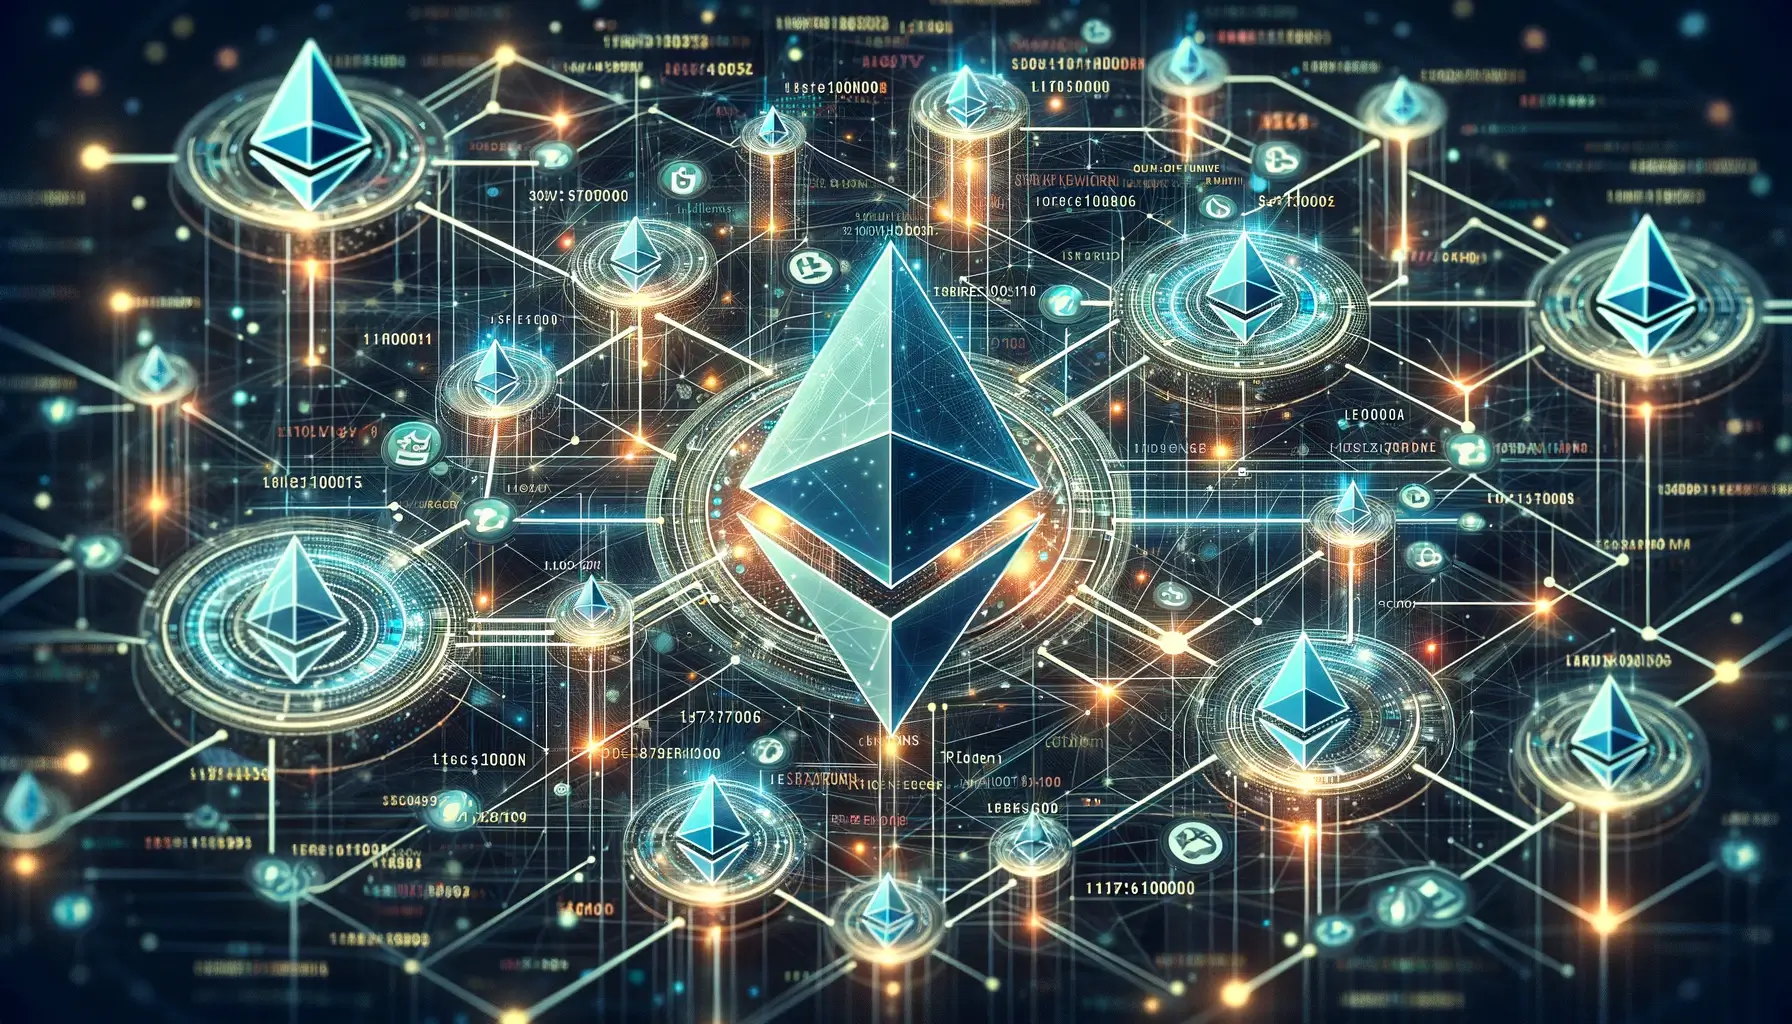 Futuristic digital landscape illustrating the functioning of the Ethereum blockchain network.